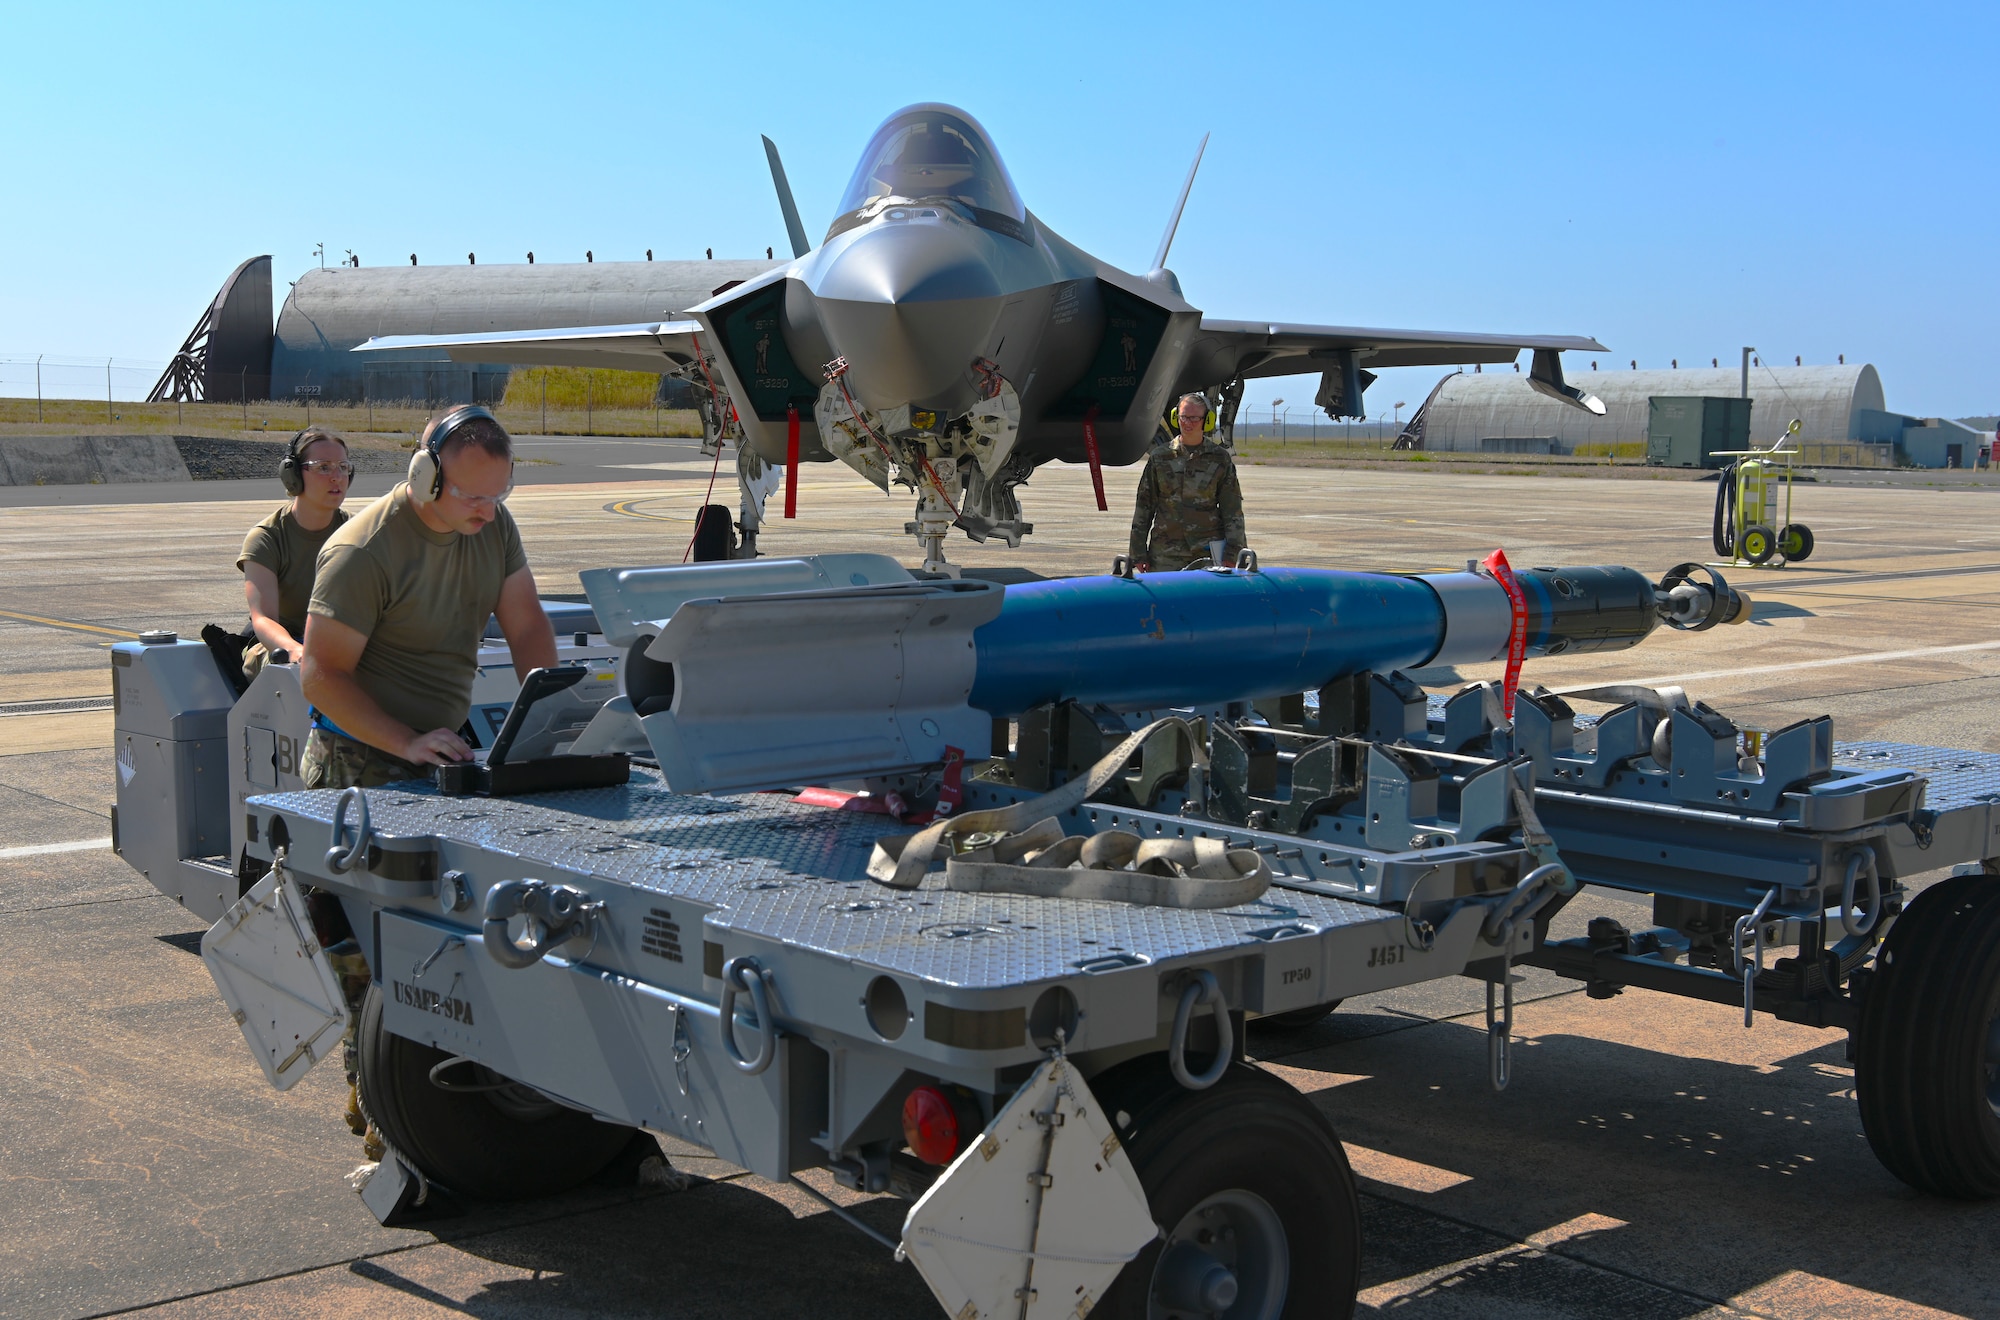 Airmen preparing to load missile onto jet